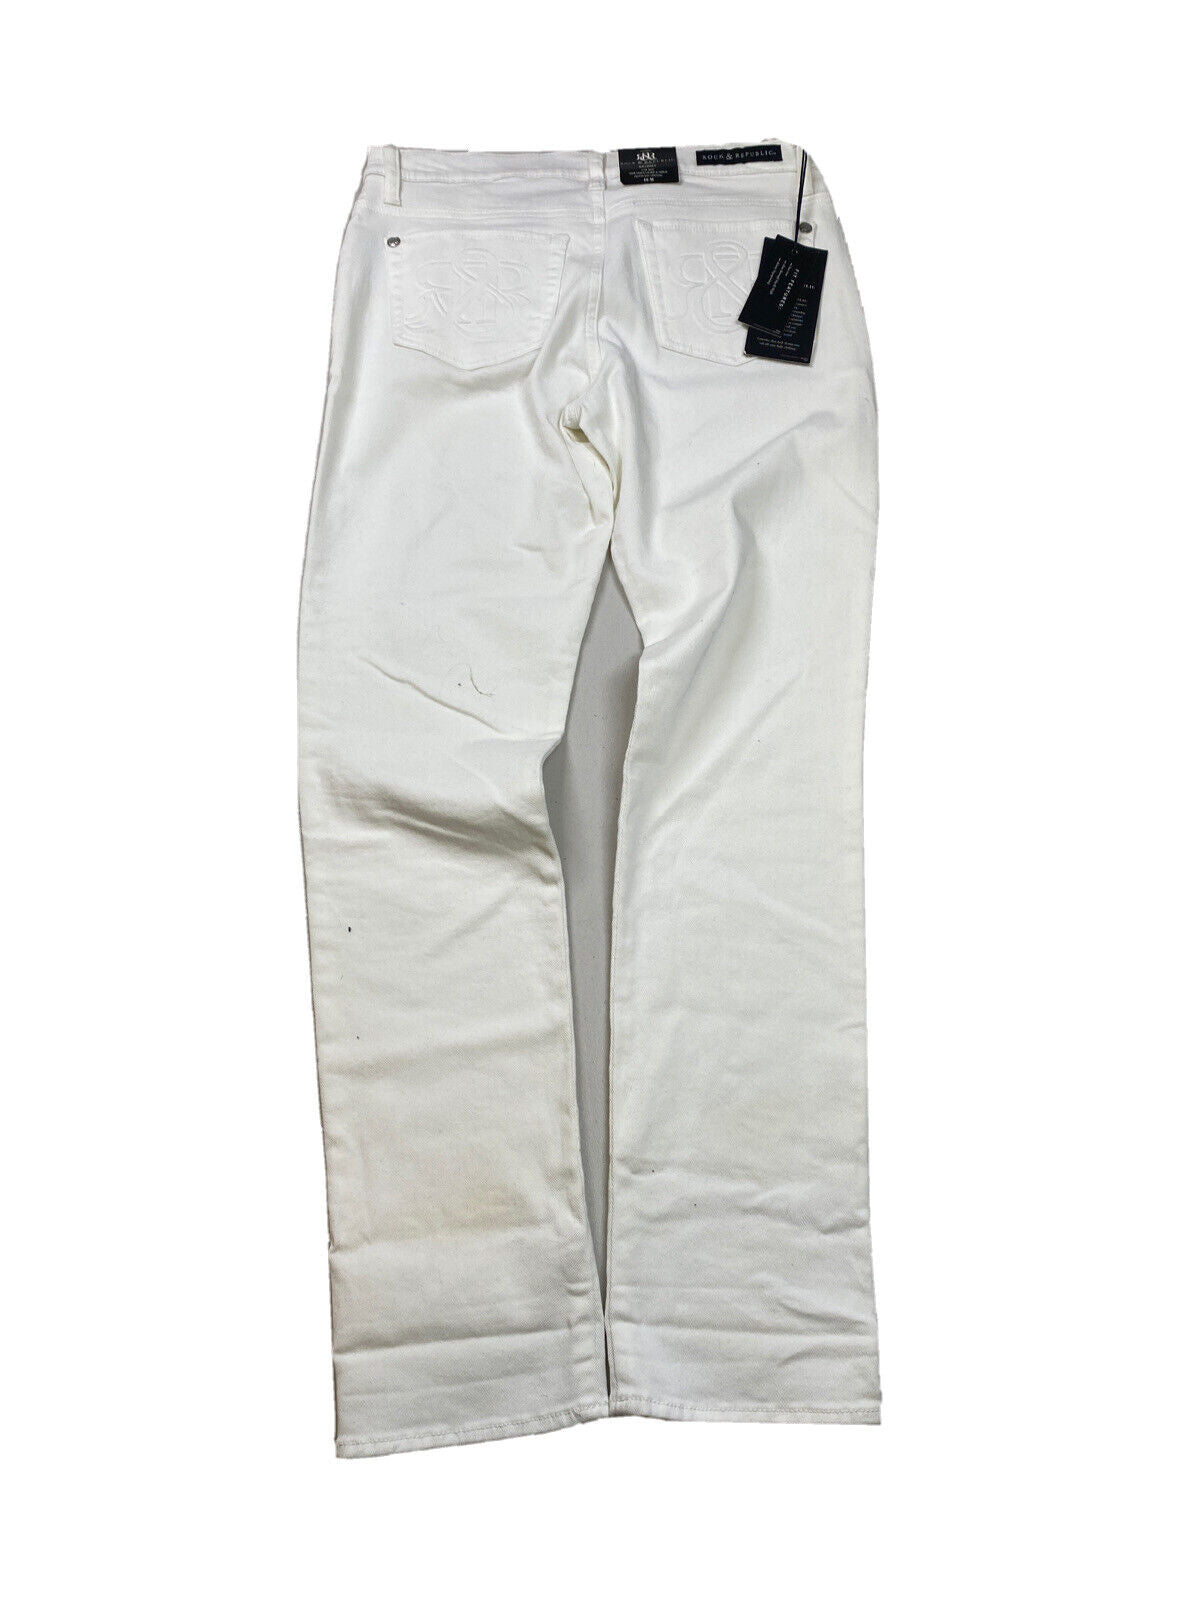 NEW Rock & Republic Women's White Low Rise Skinny Pants - 10